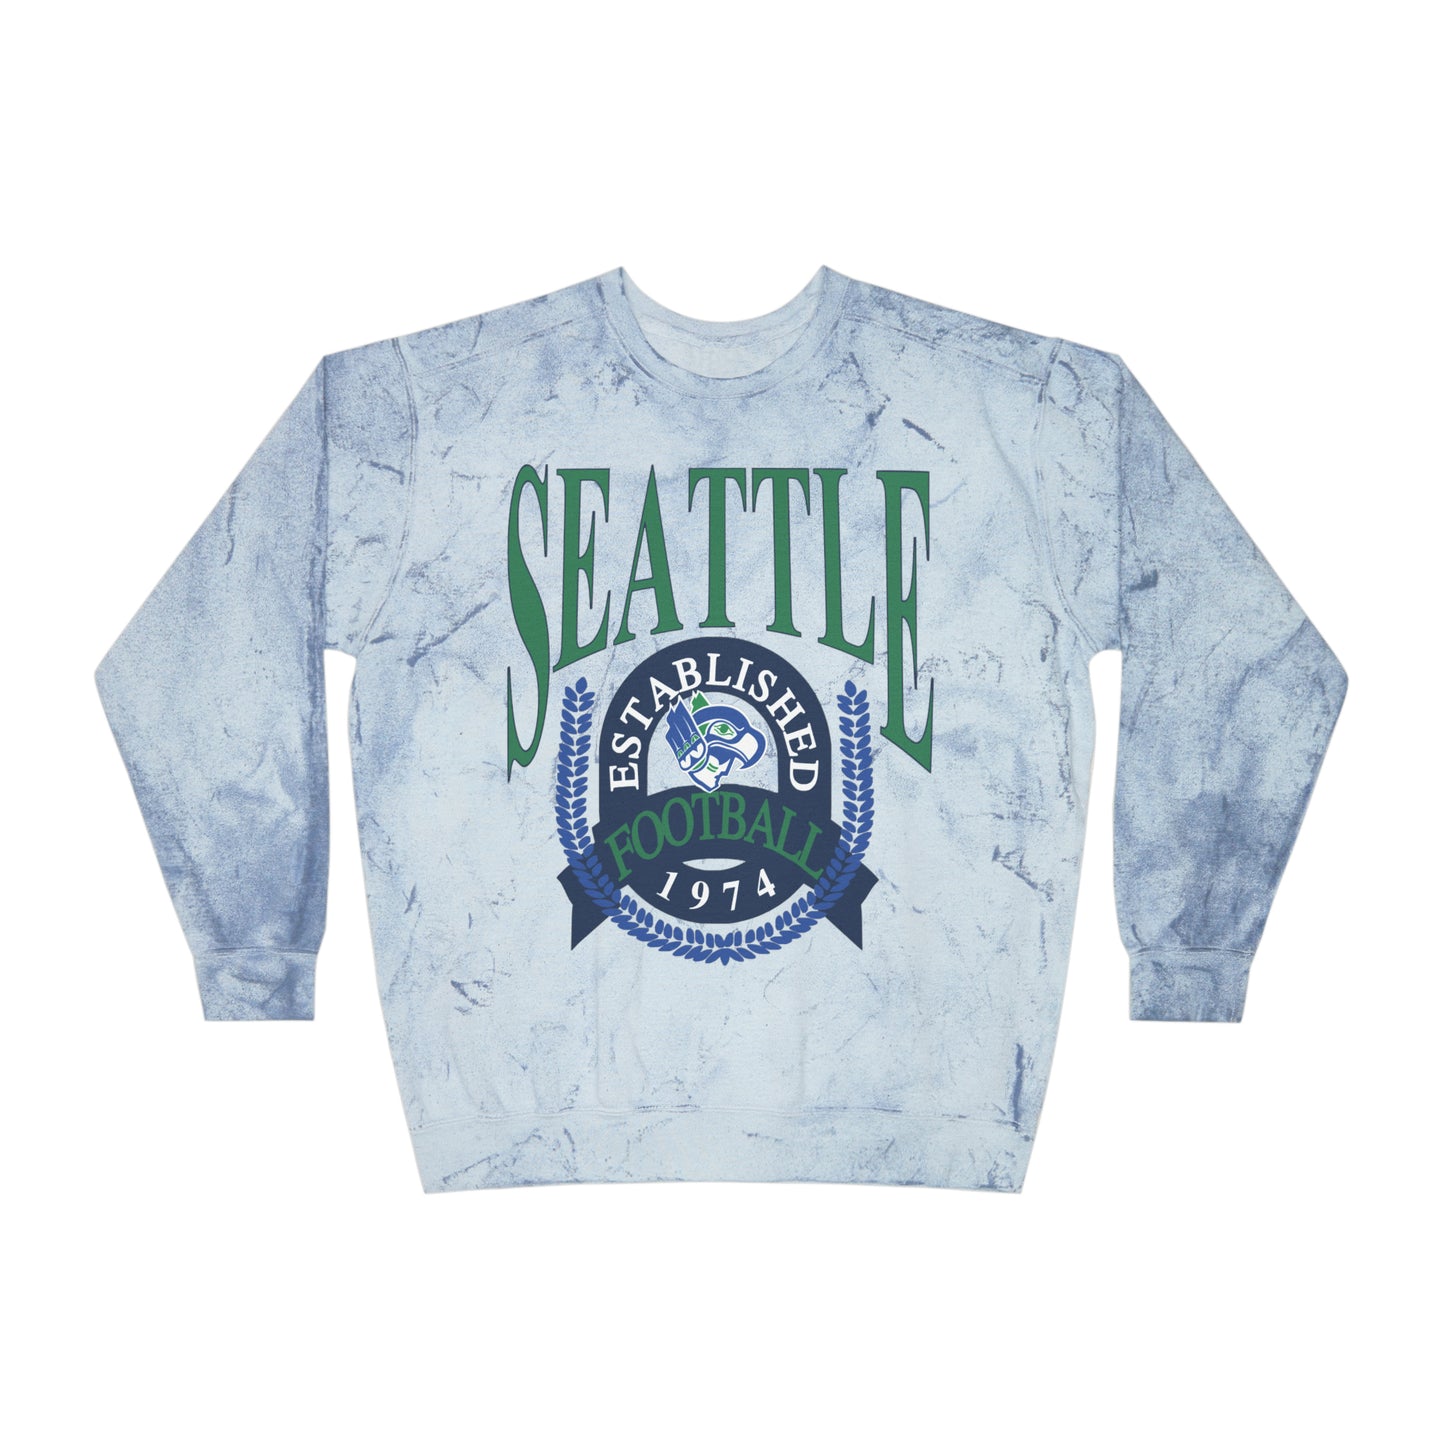 Tie Dye Comfort Colors Throwback Vintage Seattle Seahawks Sweatshirt - Retro Football Crewneck - Men's & Women's - Design 1